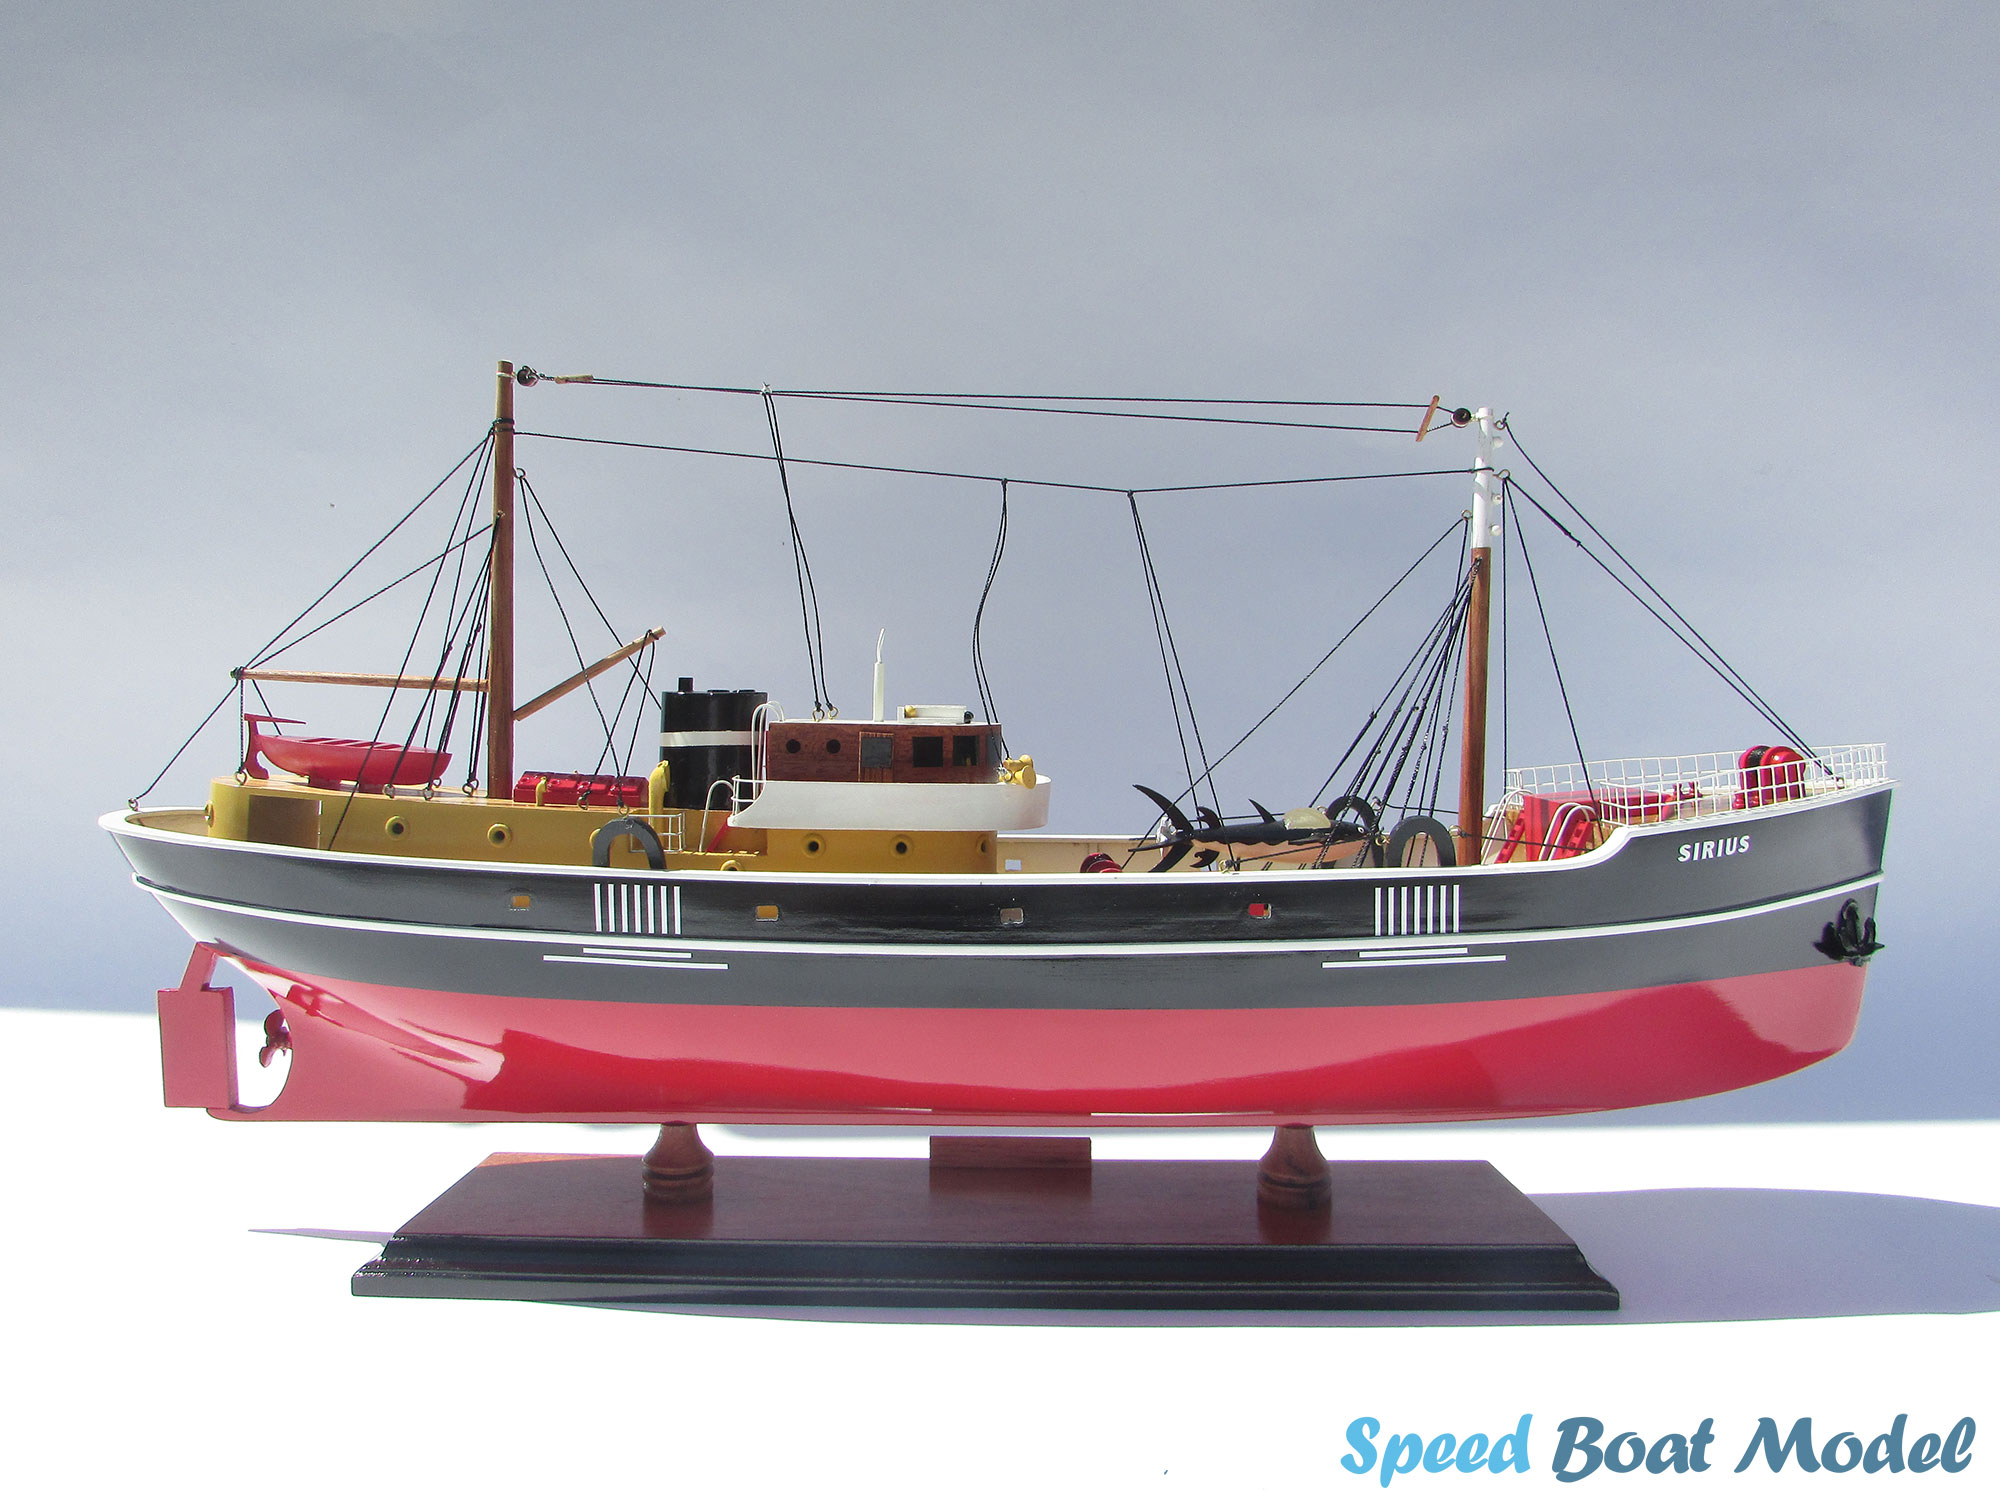 Sirius Tranditional Boat Model